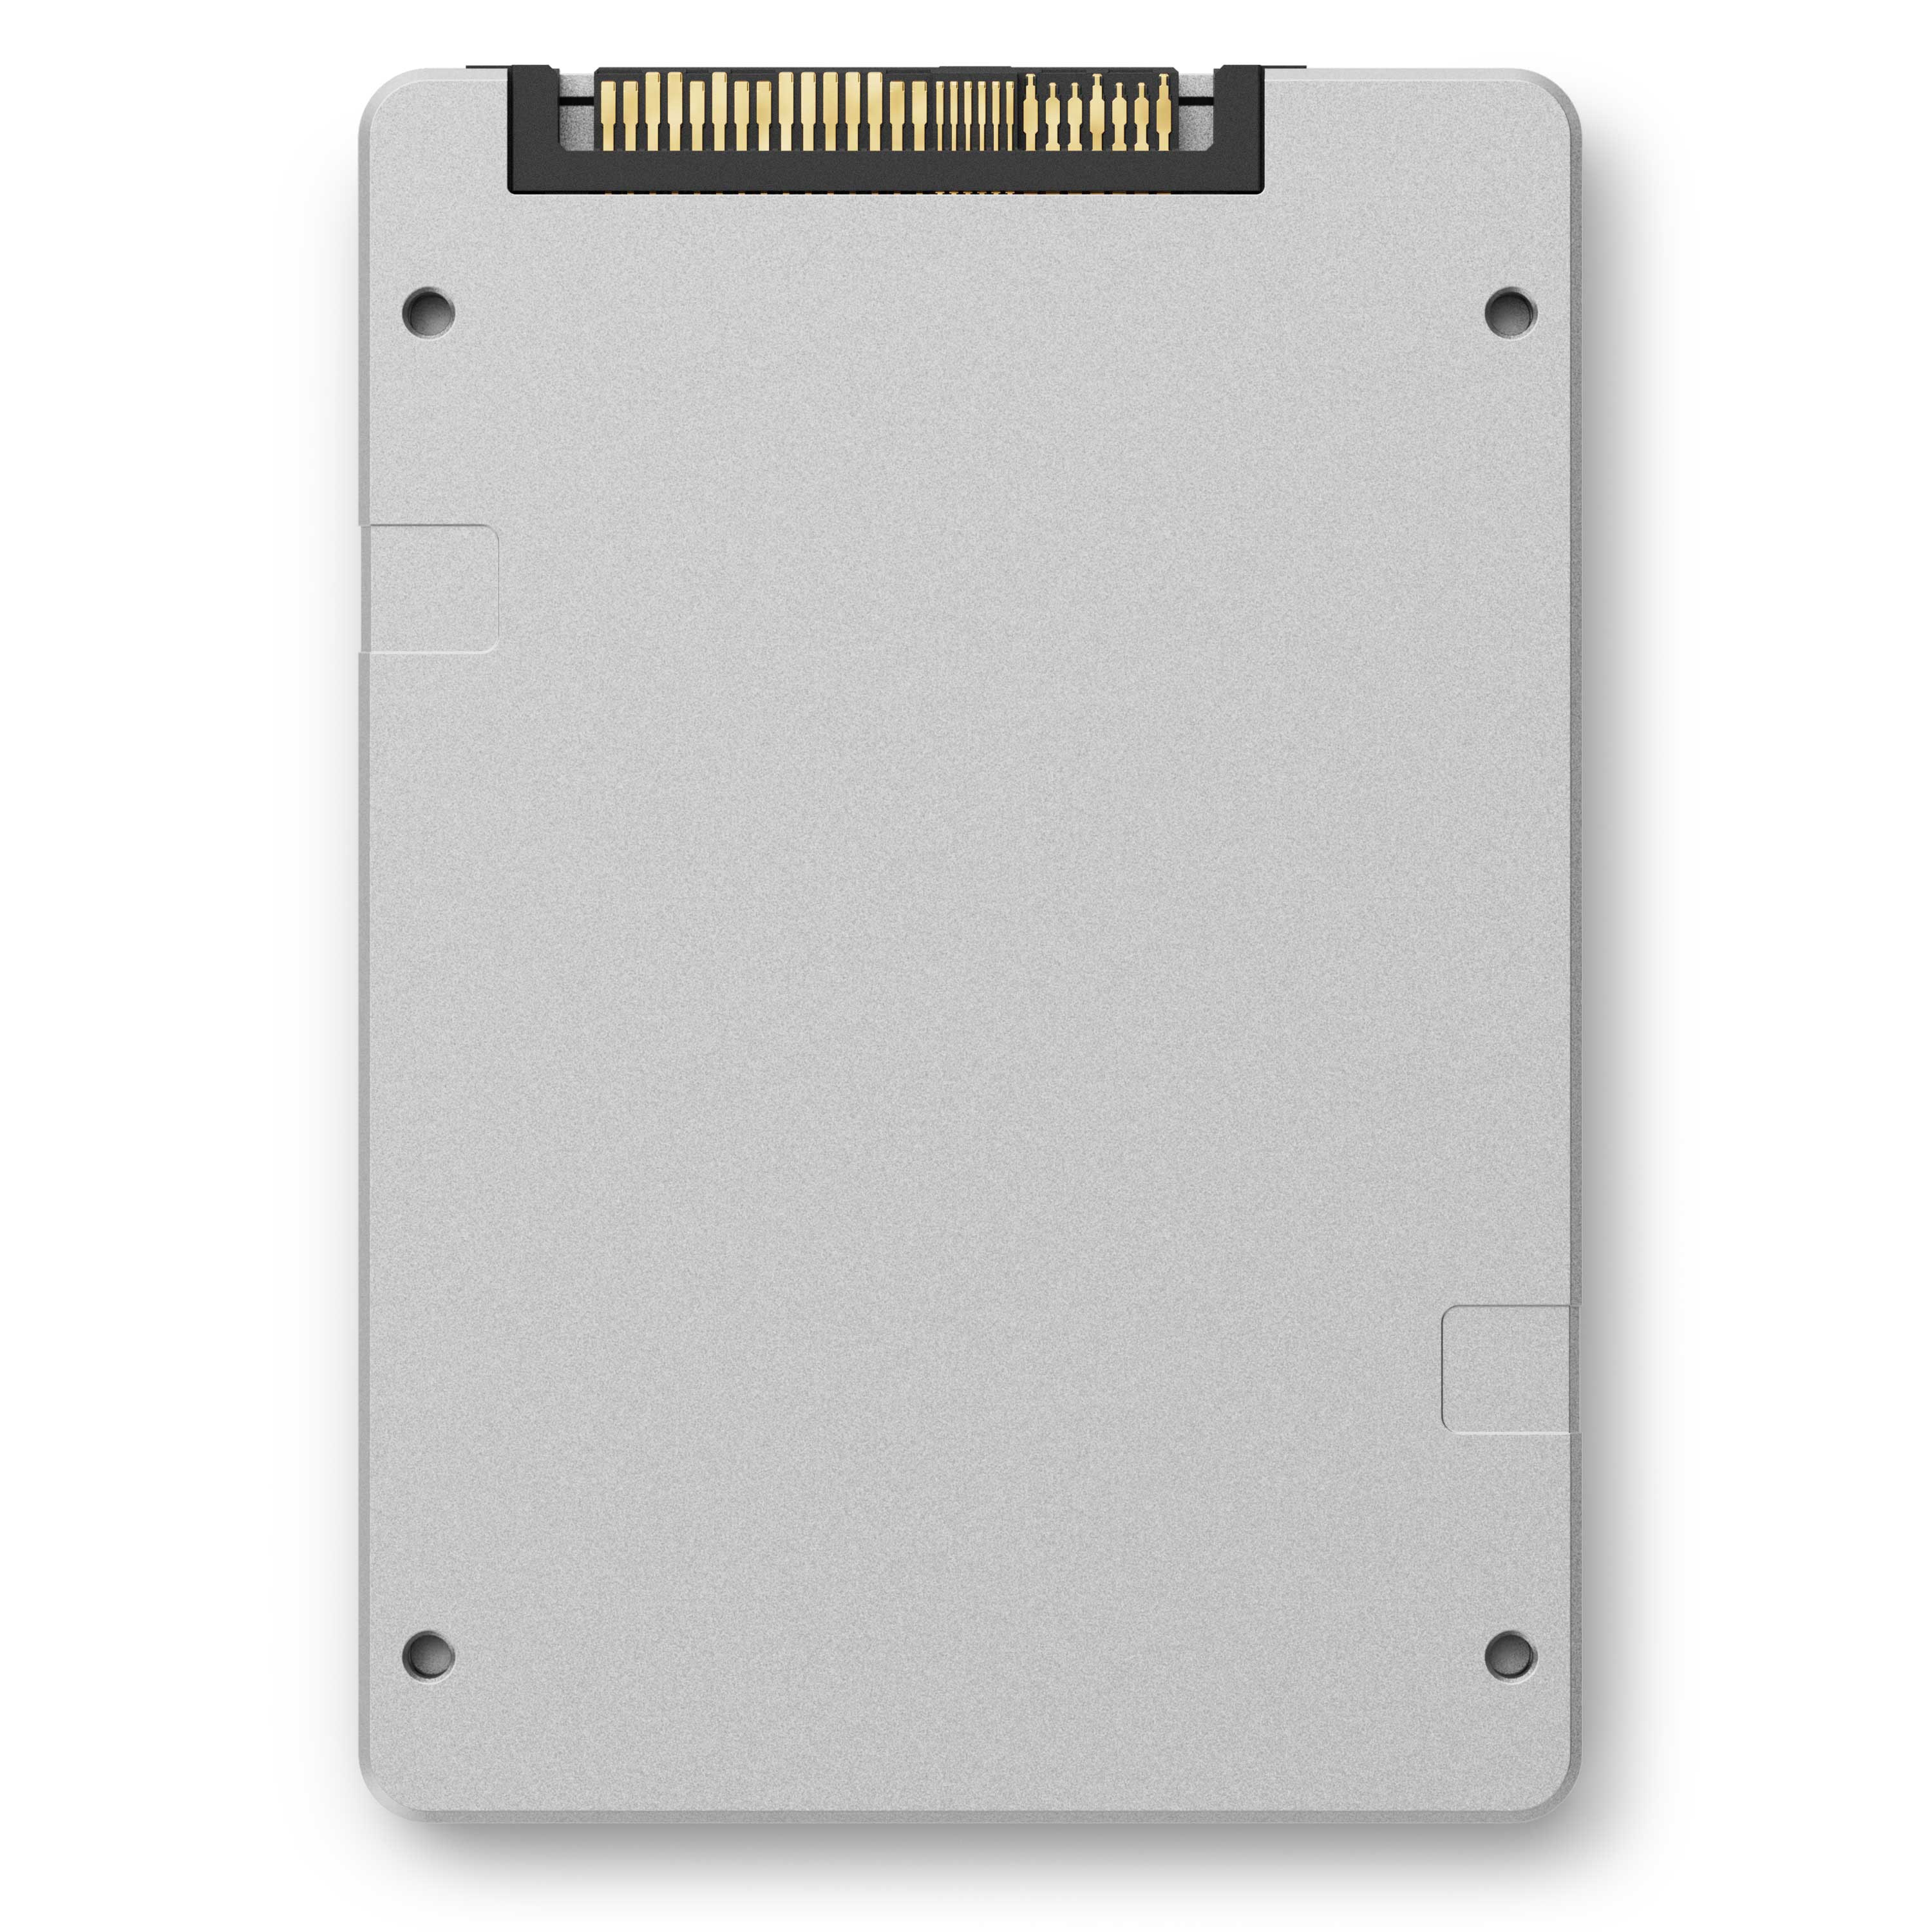 15.36TB 希捷發布創紀錄SSD：獨家主控